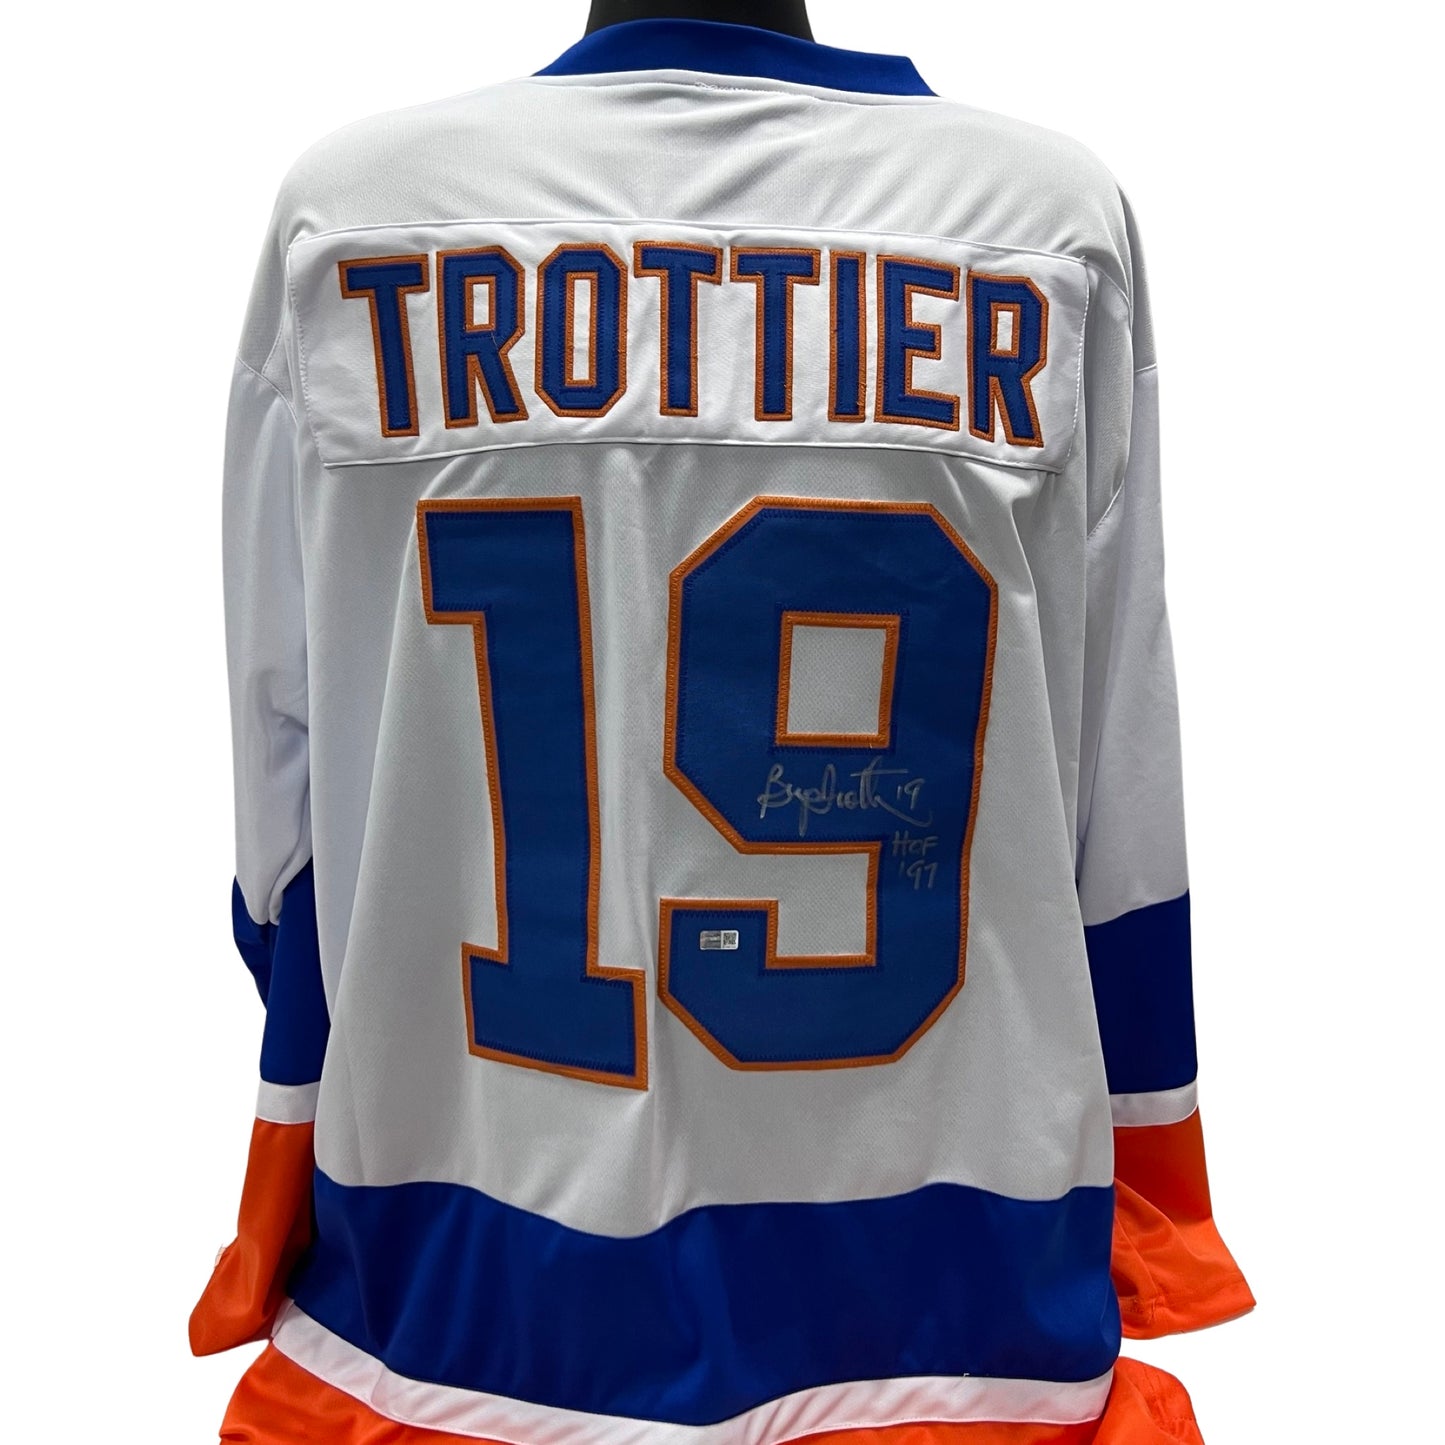 Bryan Trottier Autographed New York Islanders White Jersey "HOF '97" Inscription Steiner CX